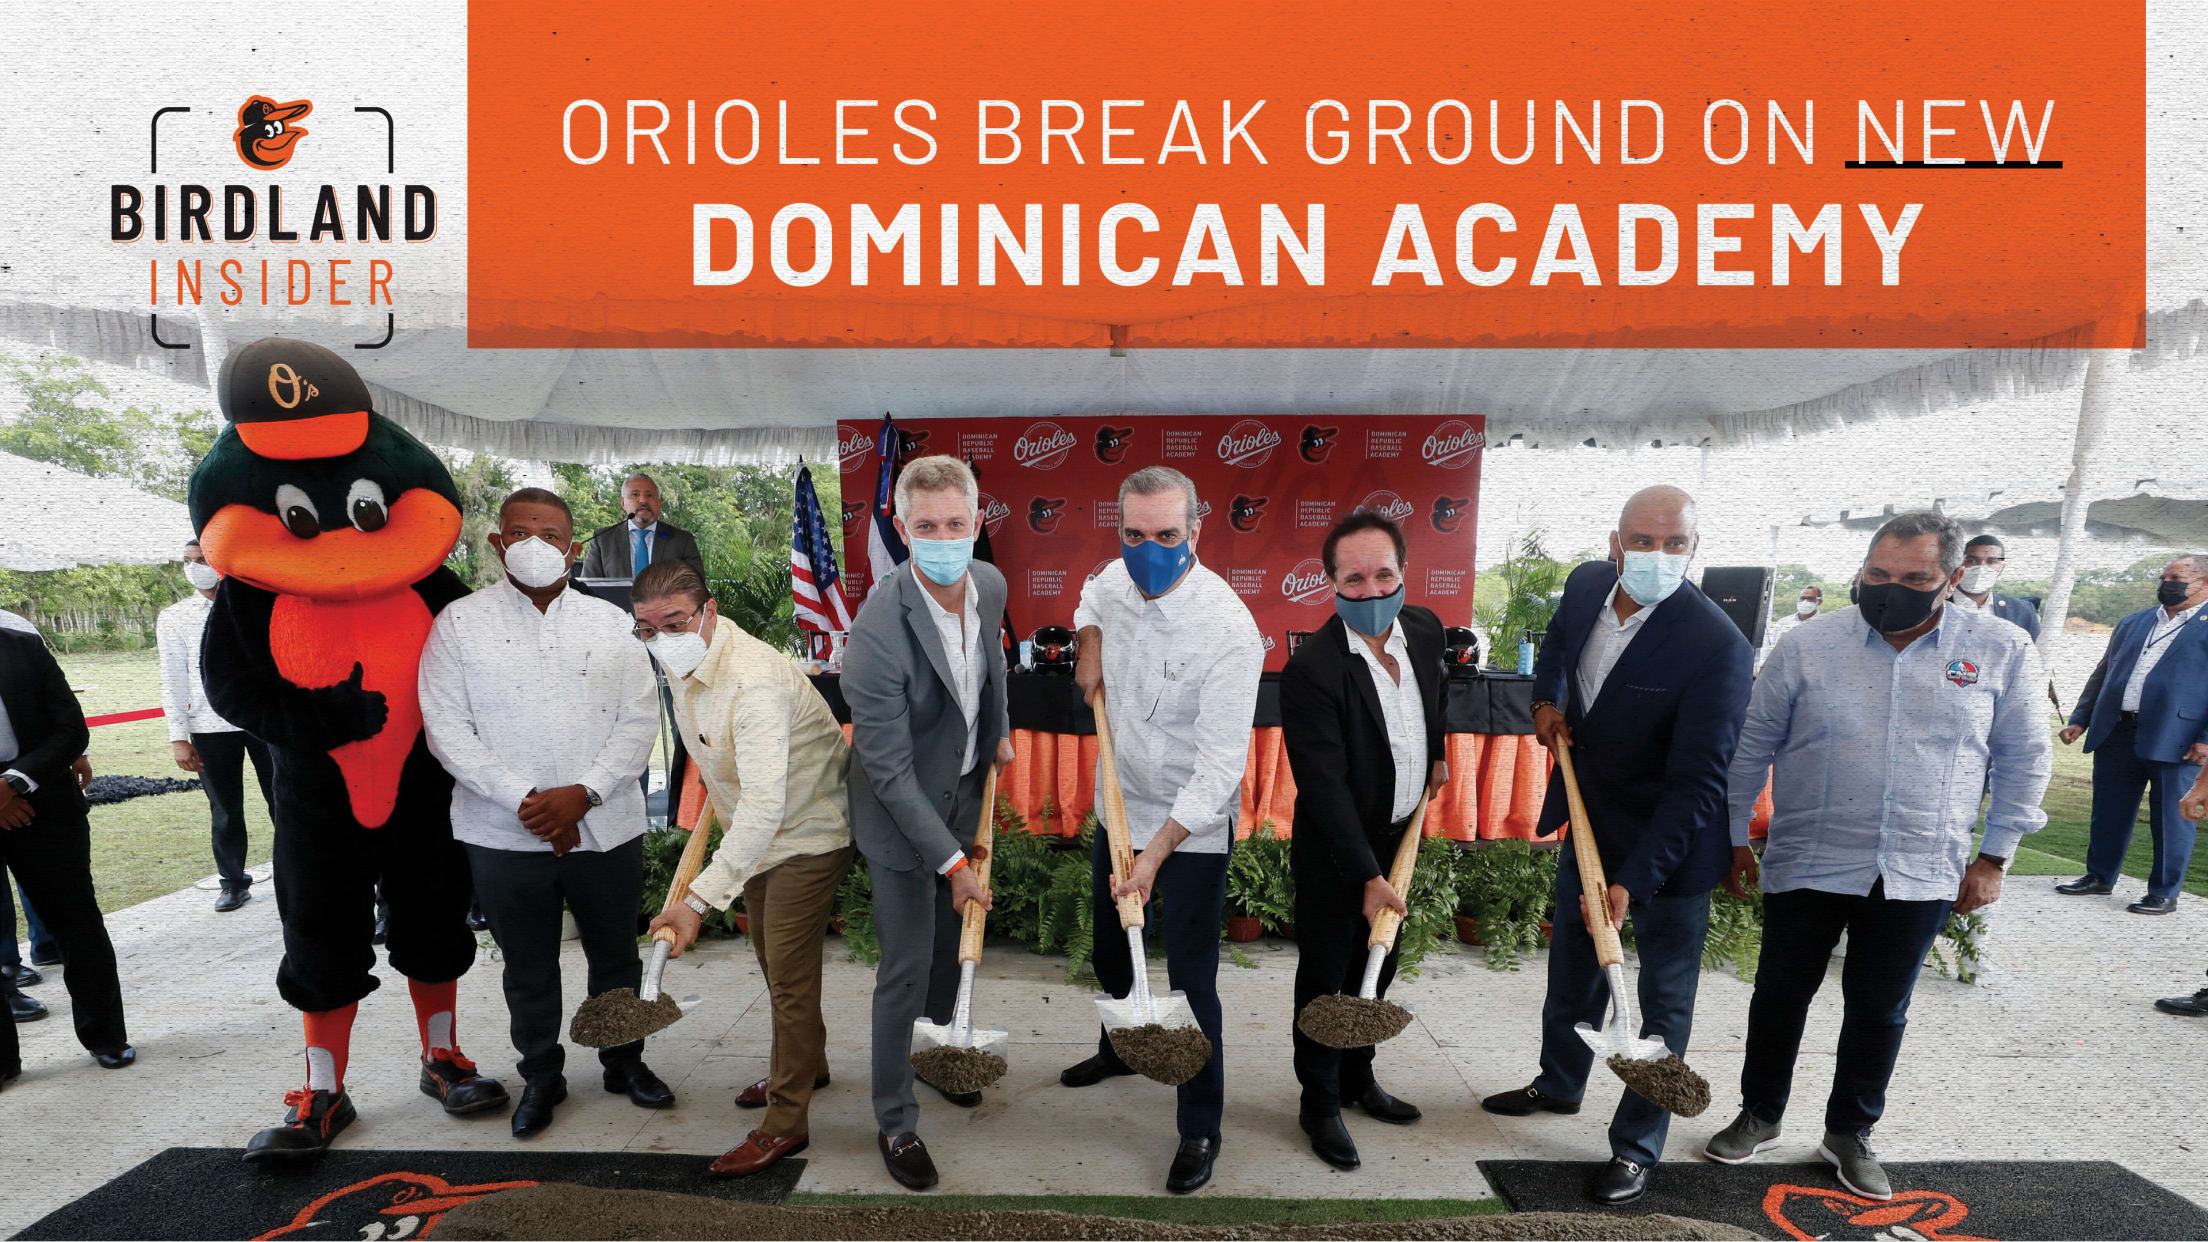 bal-orioles-break-ground-on-new-dominican-academy-header